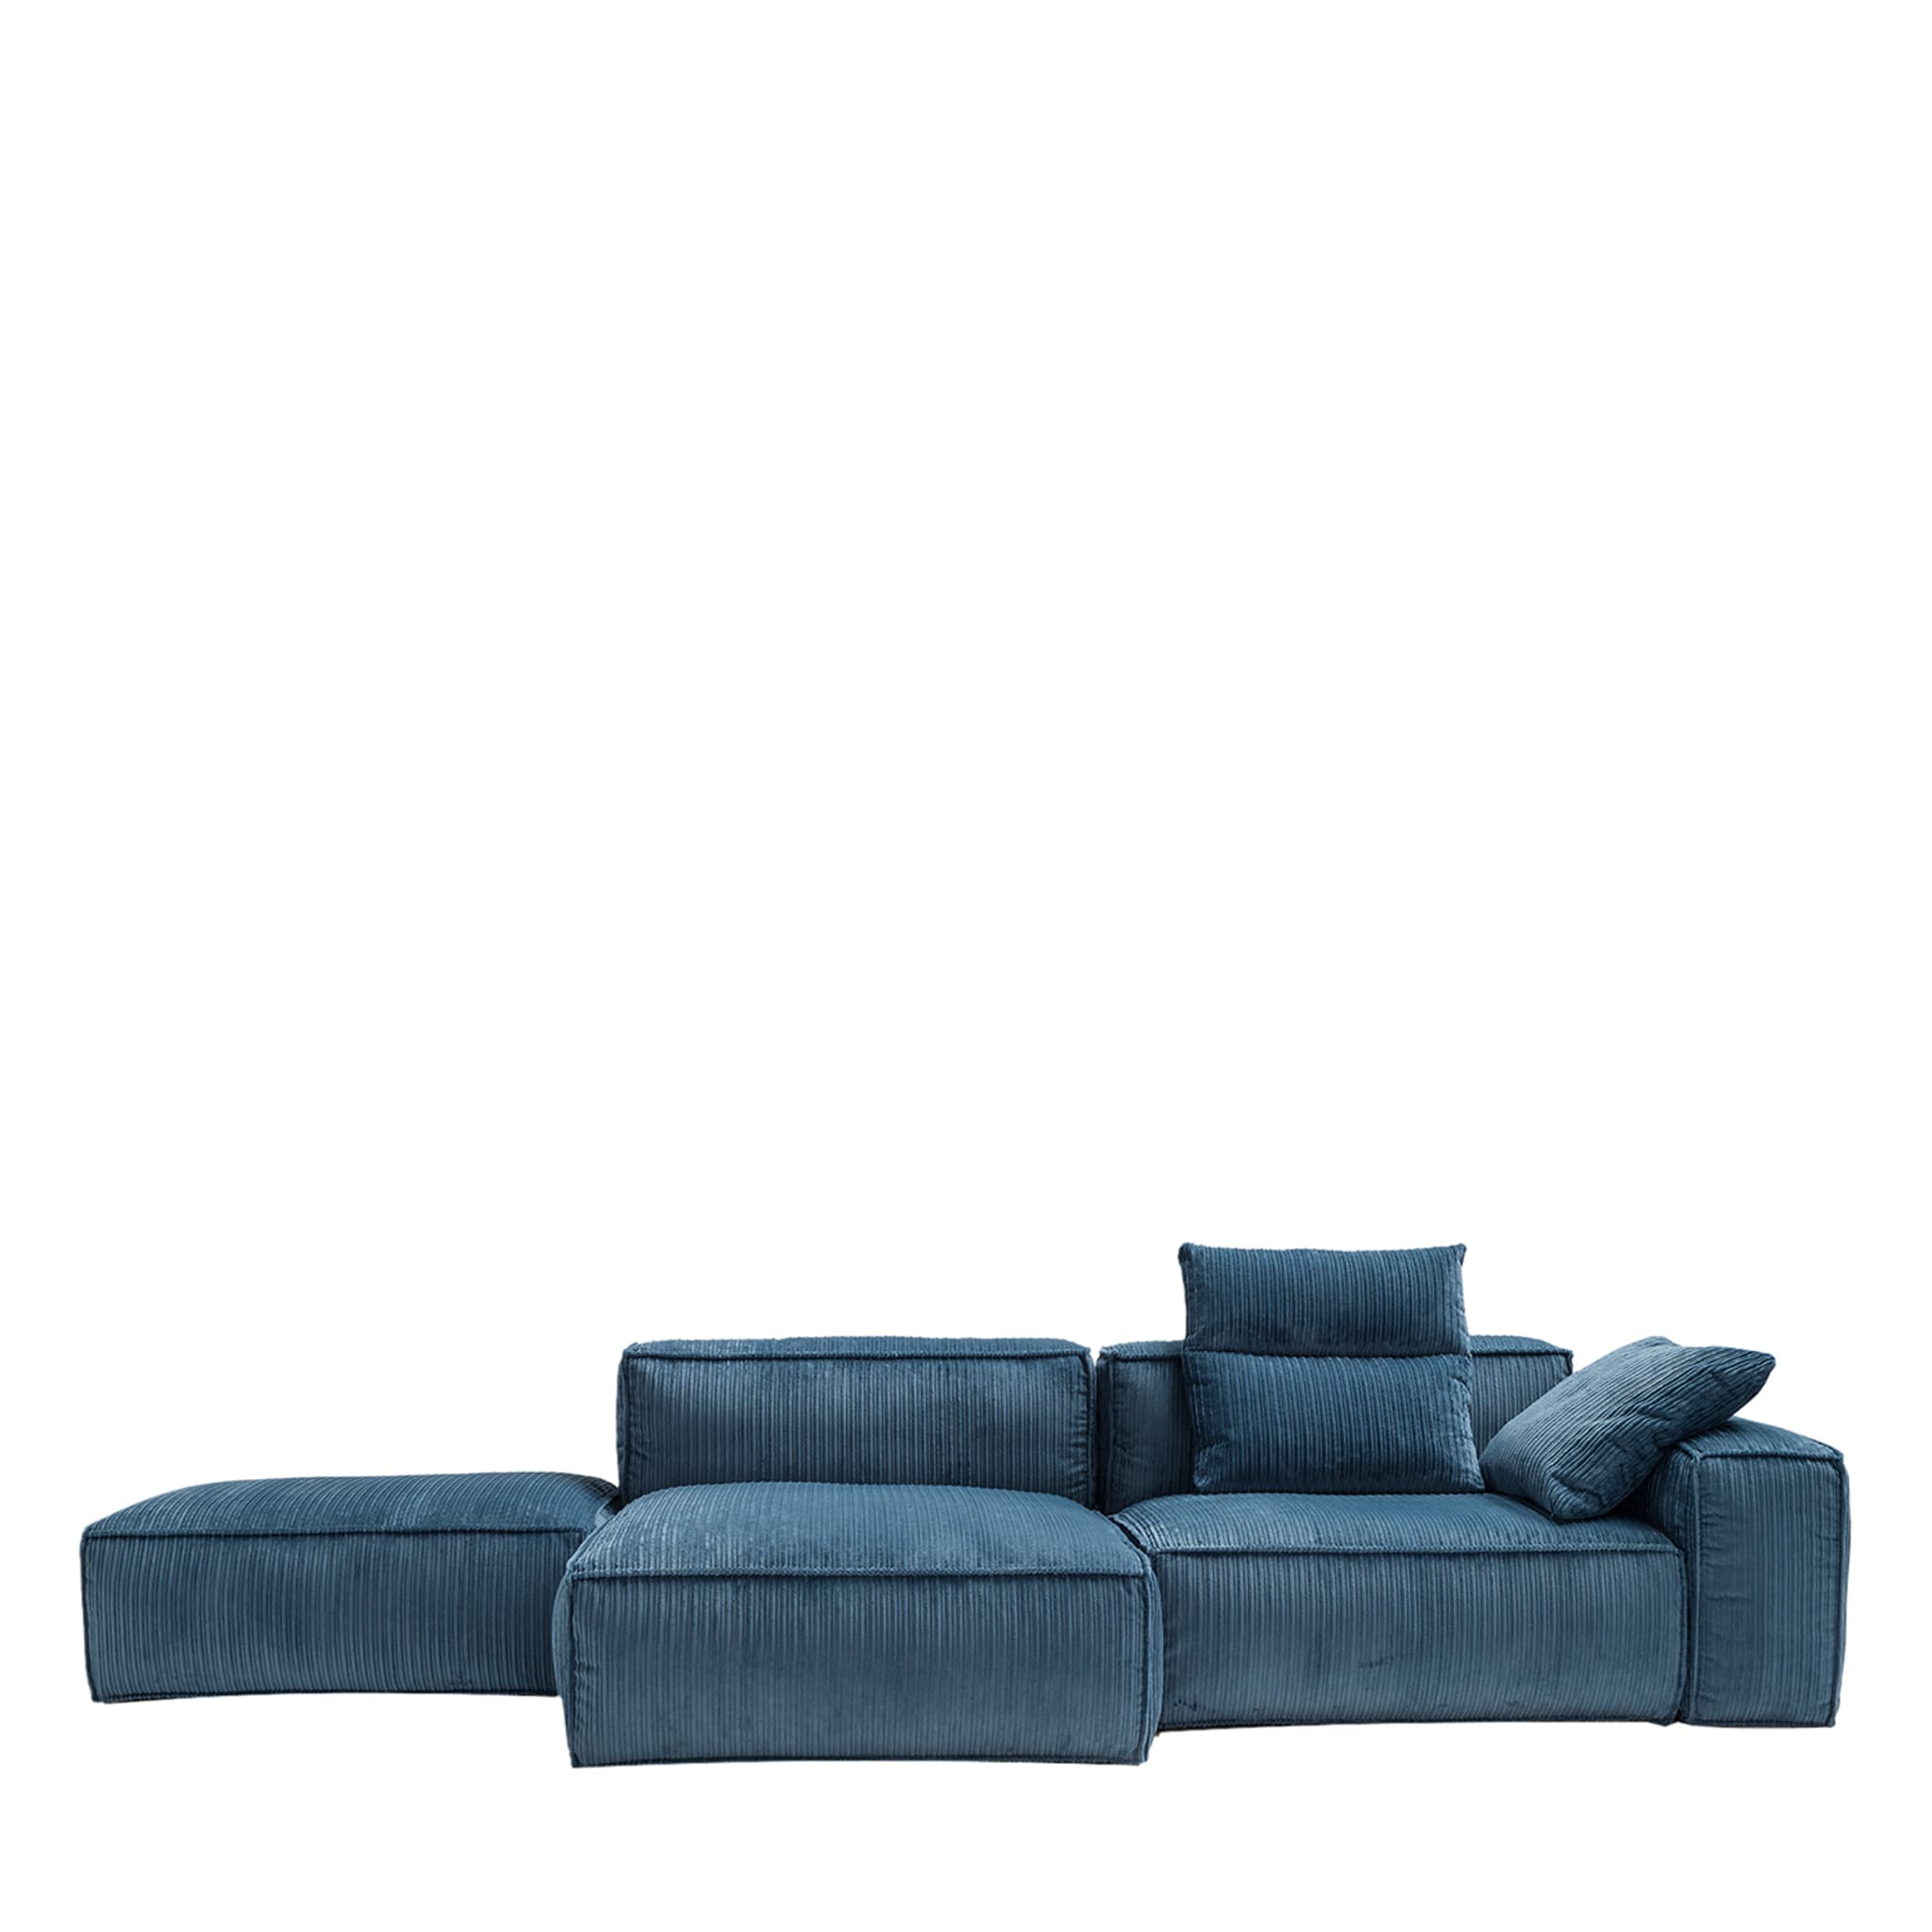 Astor Blue Sofa - Hauptansicht